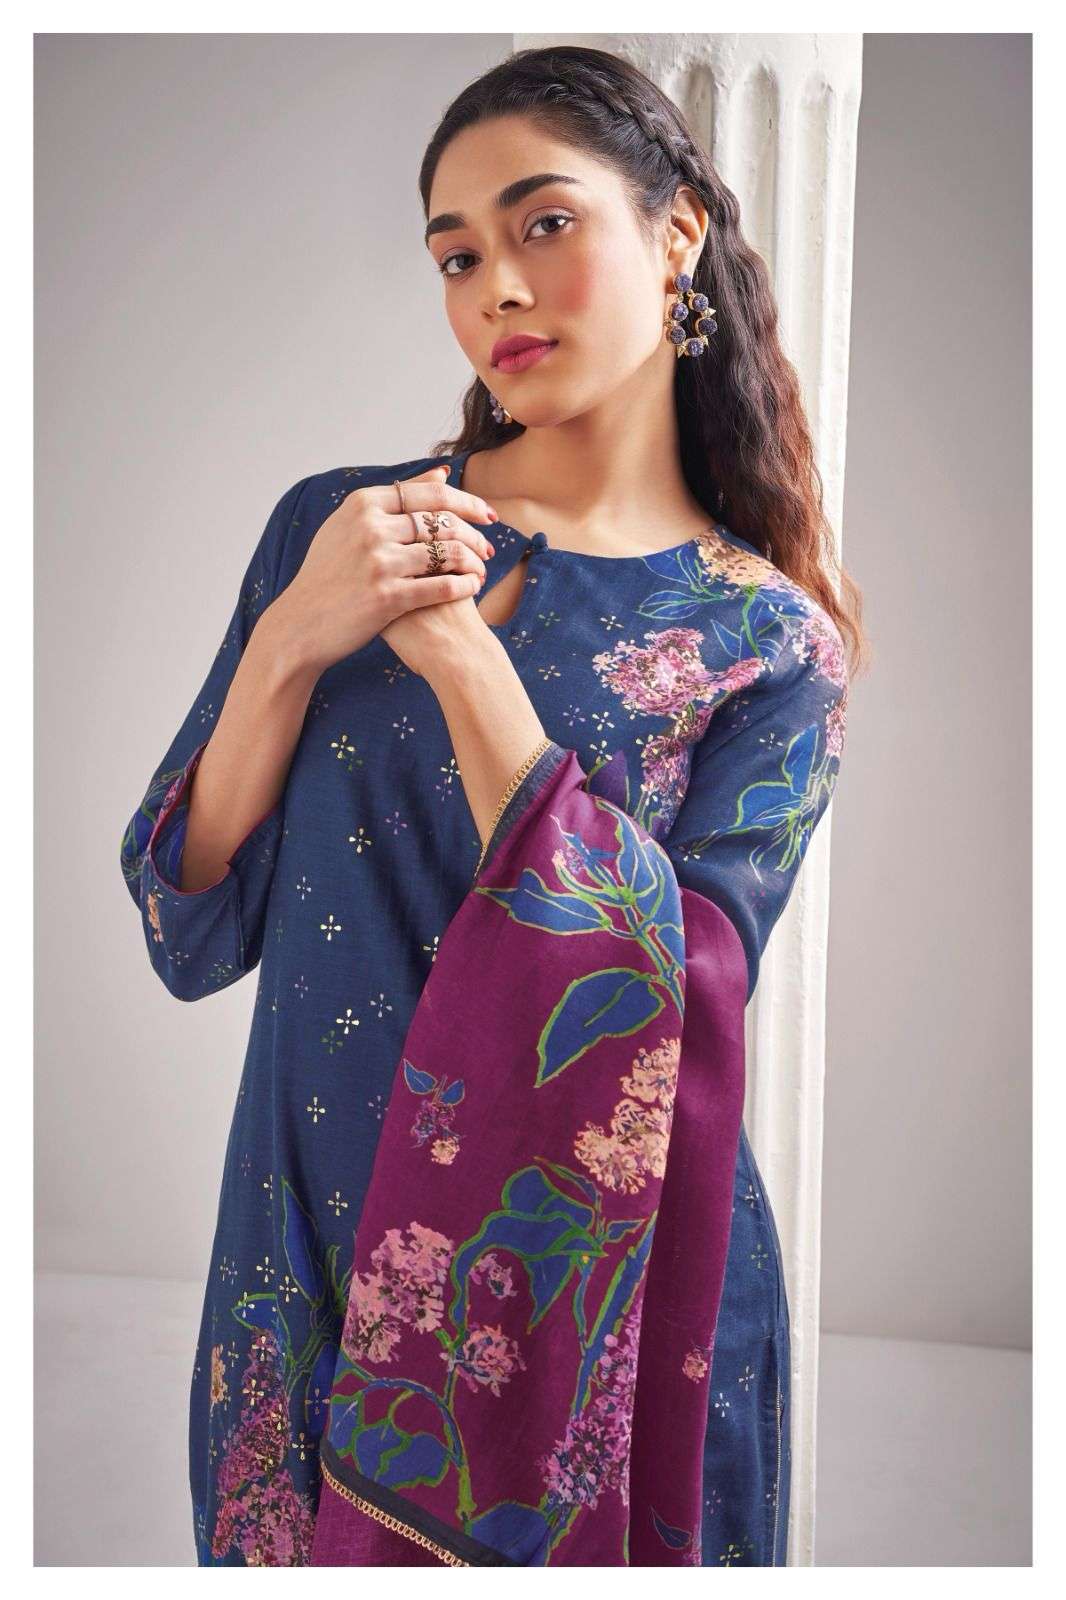 ganga olene 2124 colour series latest designer pakistani salwar kameez wholesaler surat gujarat